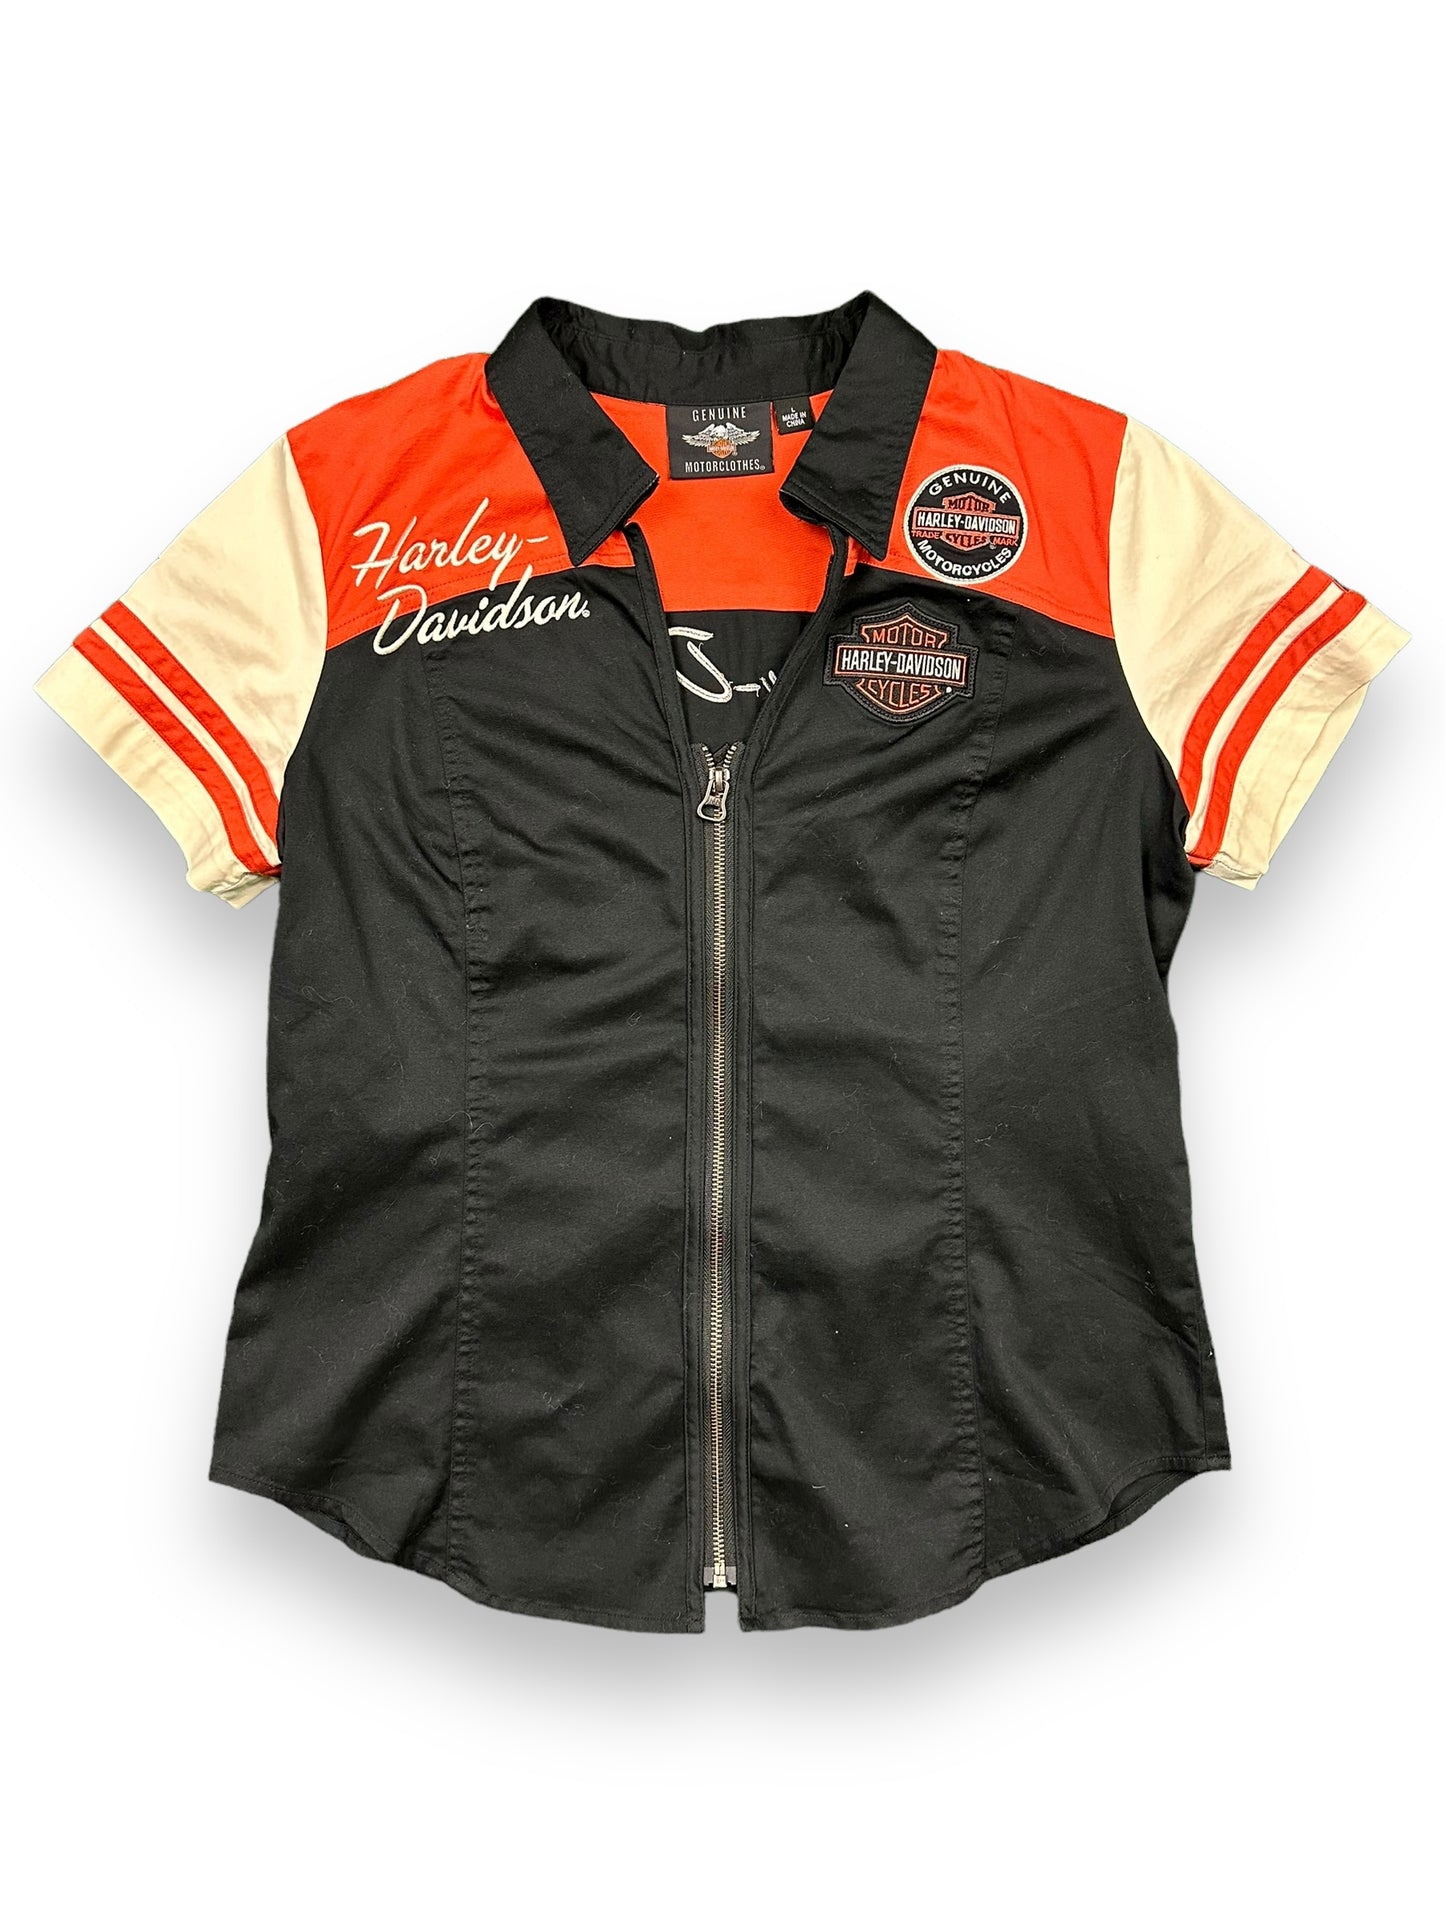 Harley Davidson Garage Shirt